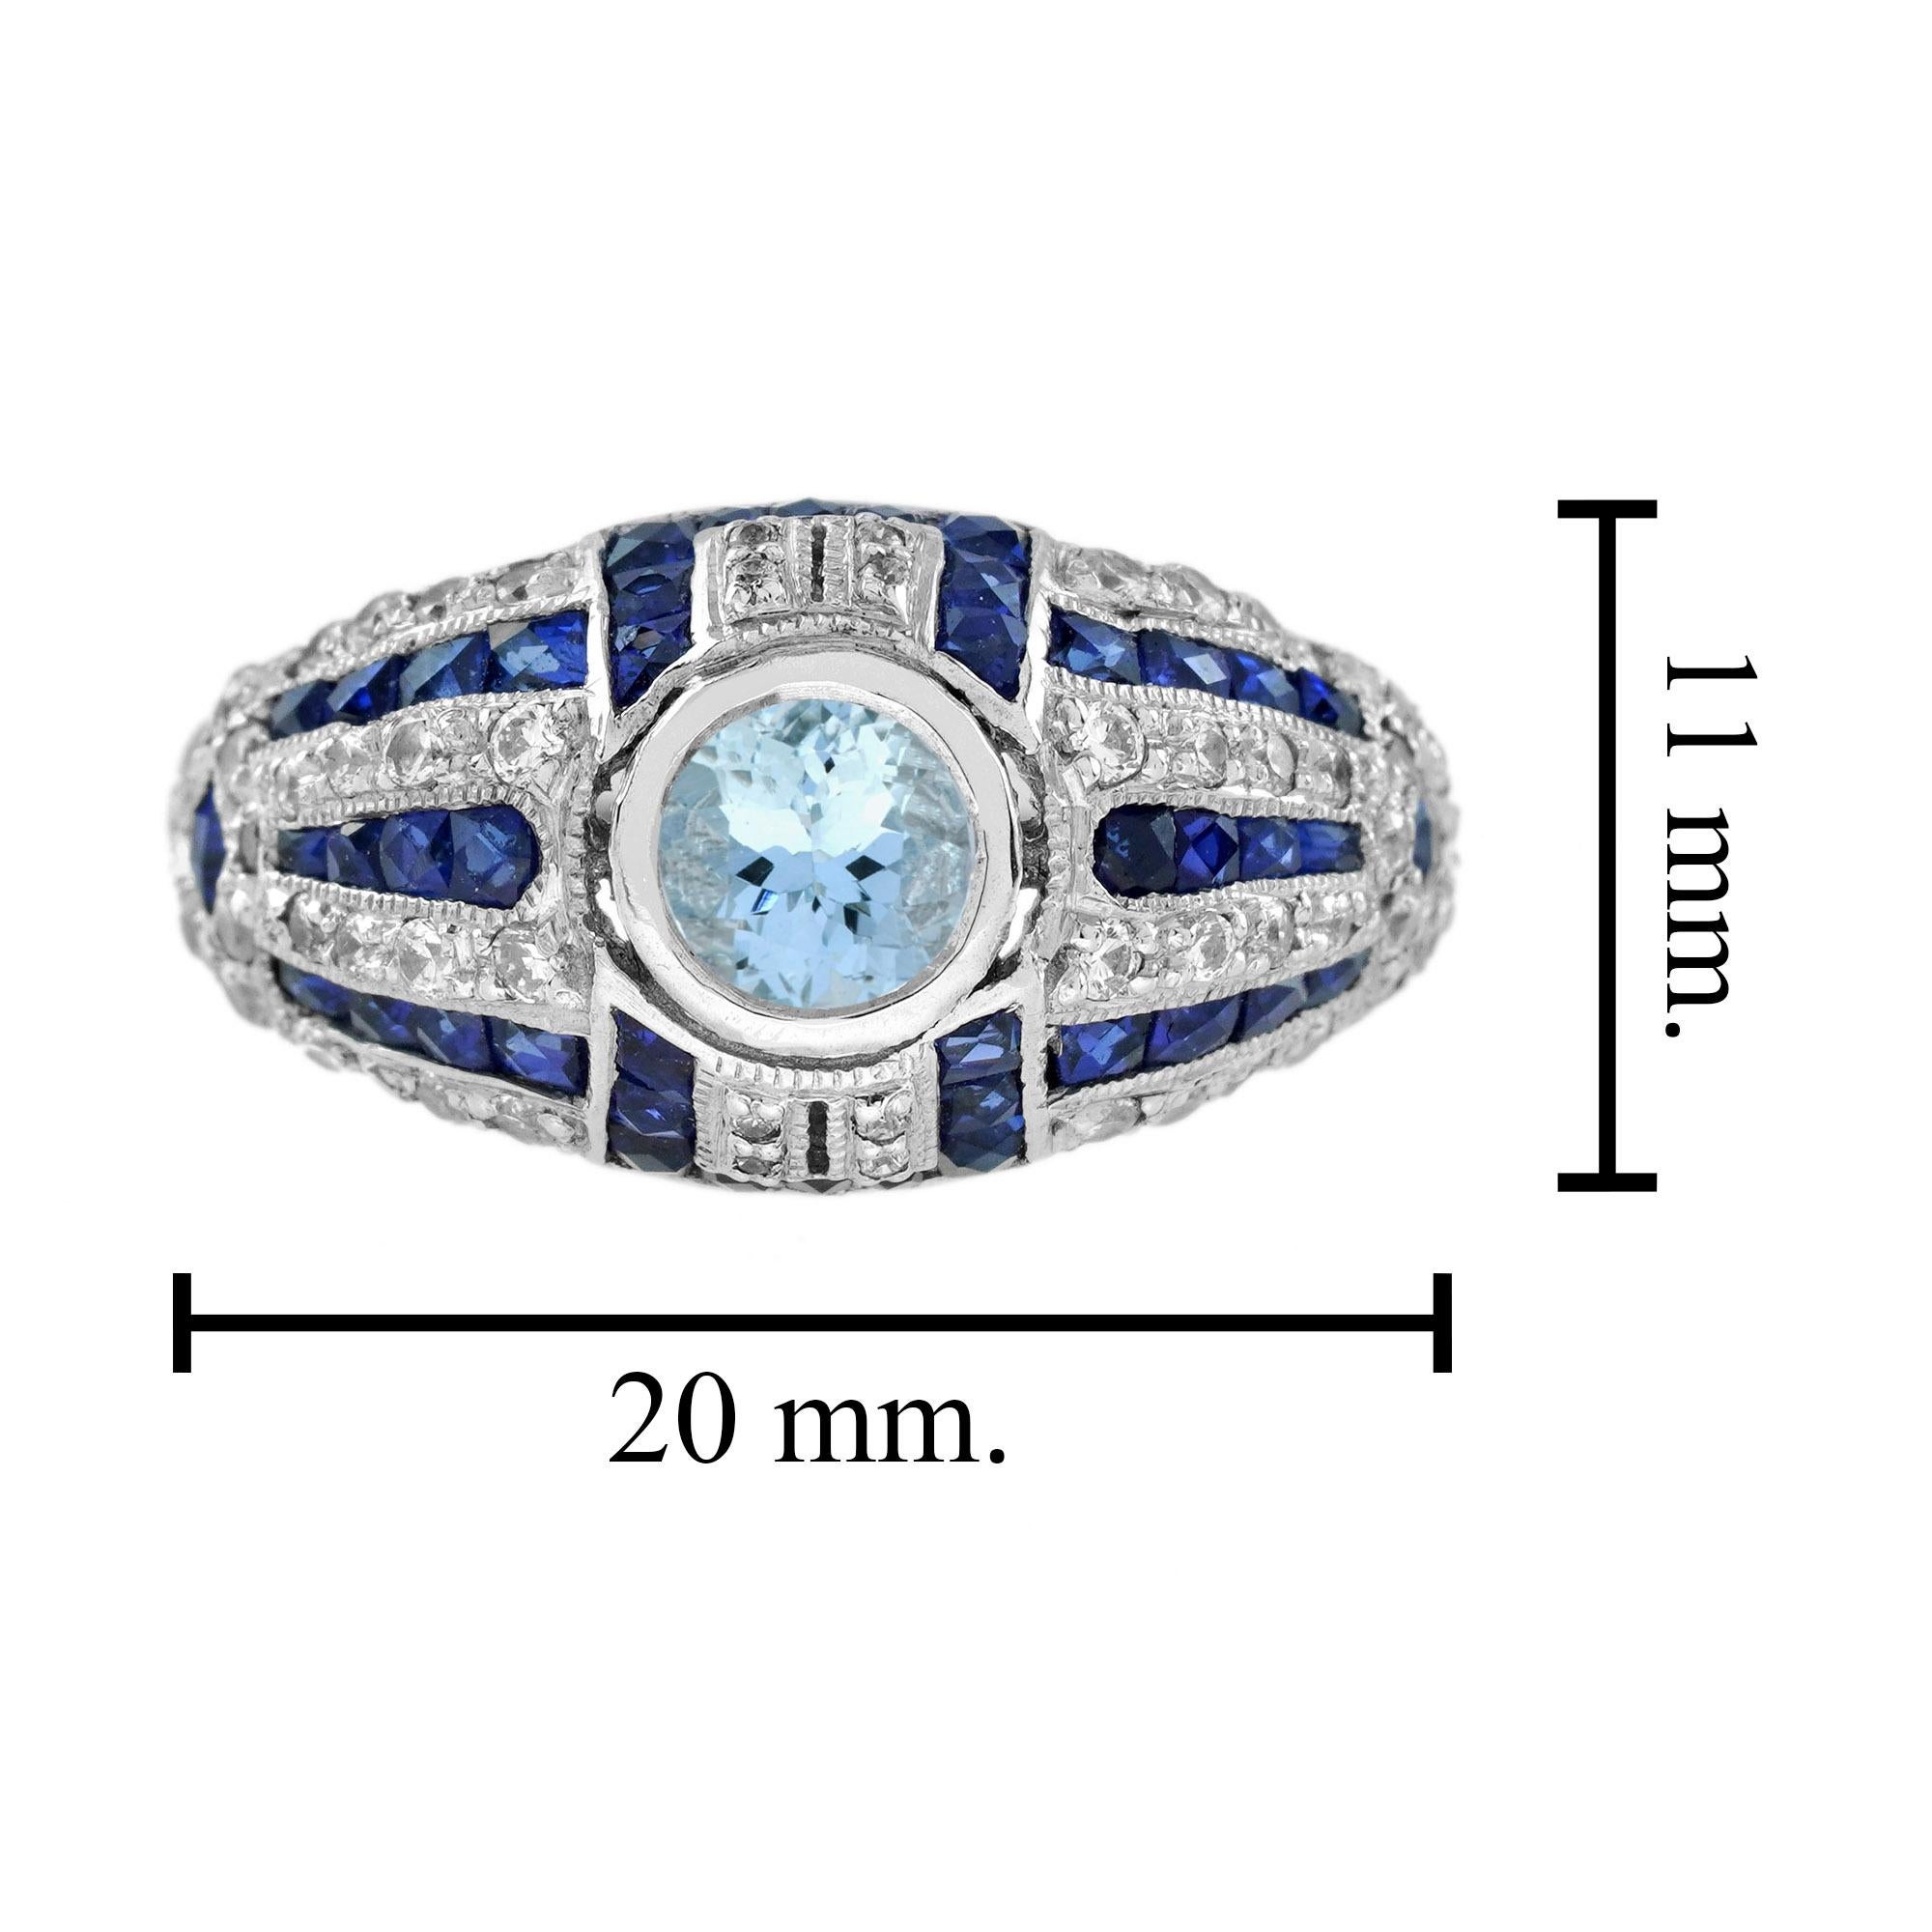 Aquamarine Blue Sapphire Diamond Art Deco Style Dome Ring in 18K White Gold For Sale 2